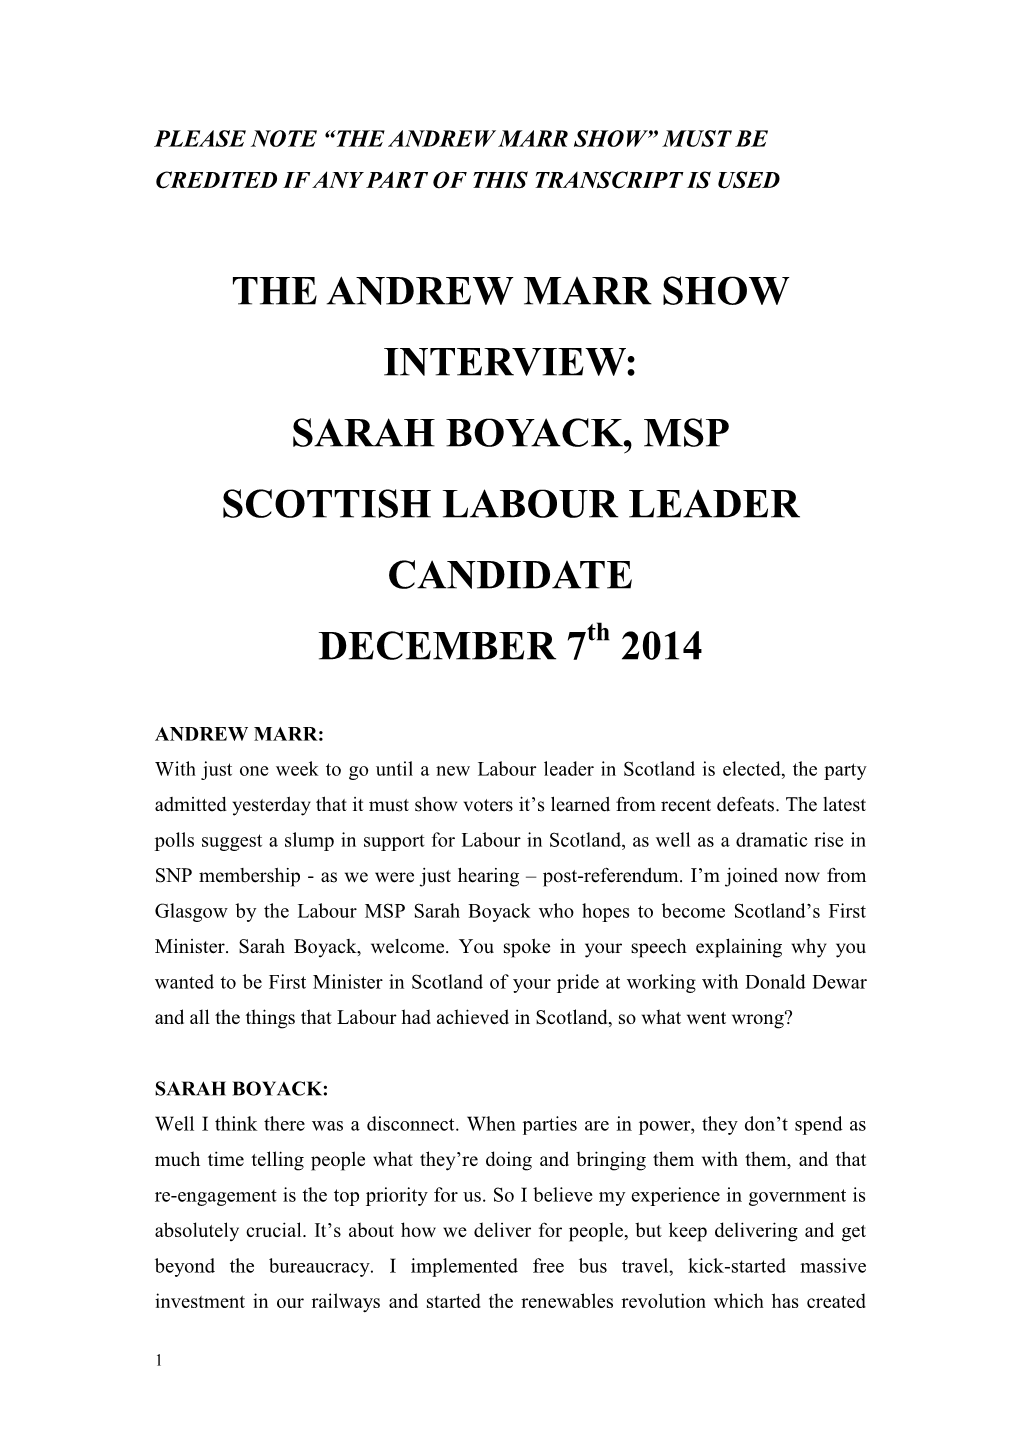 SARAH BOYACK, MSP SCOTTISH LABOUR LEADER CANDIDATE DECEMBER 7Th 2014